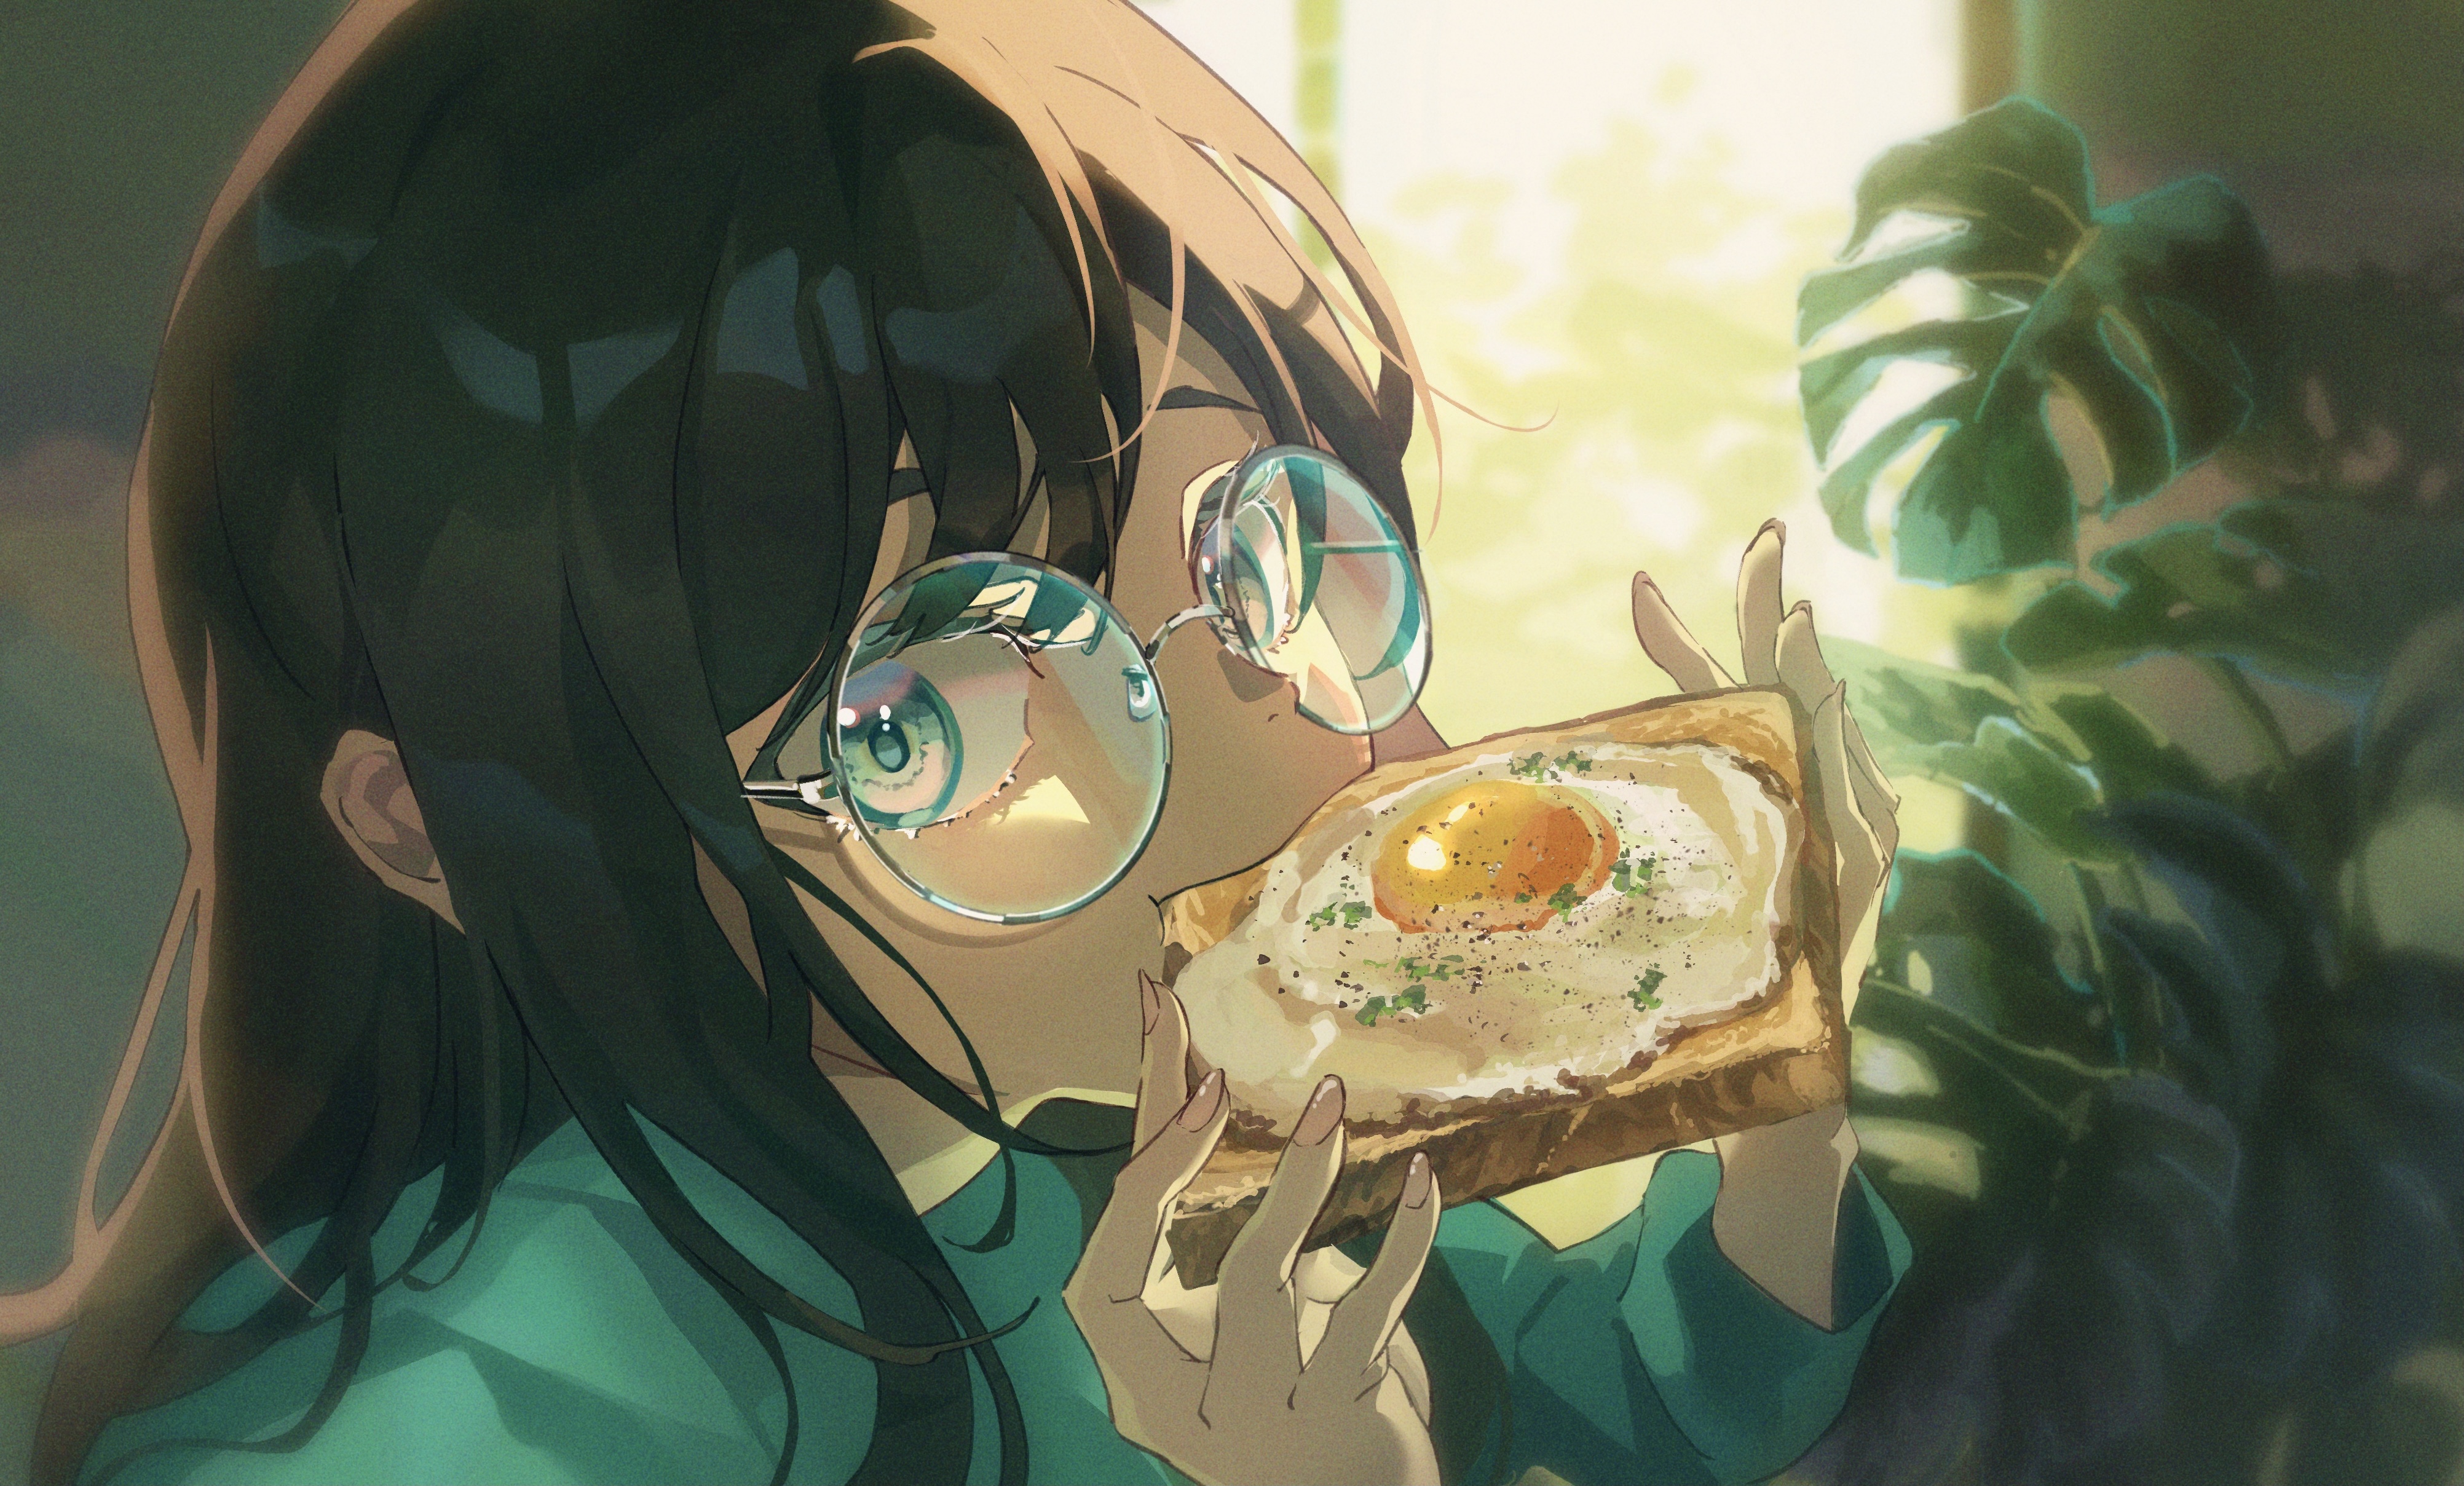 Anime Anime Girls Digital Art Artwork Pixiv Looking At Viewer 2D Anime Girls Eating Toast Eggs Leave 4008x2417